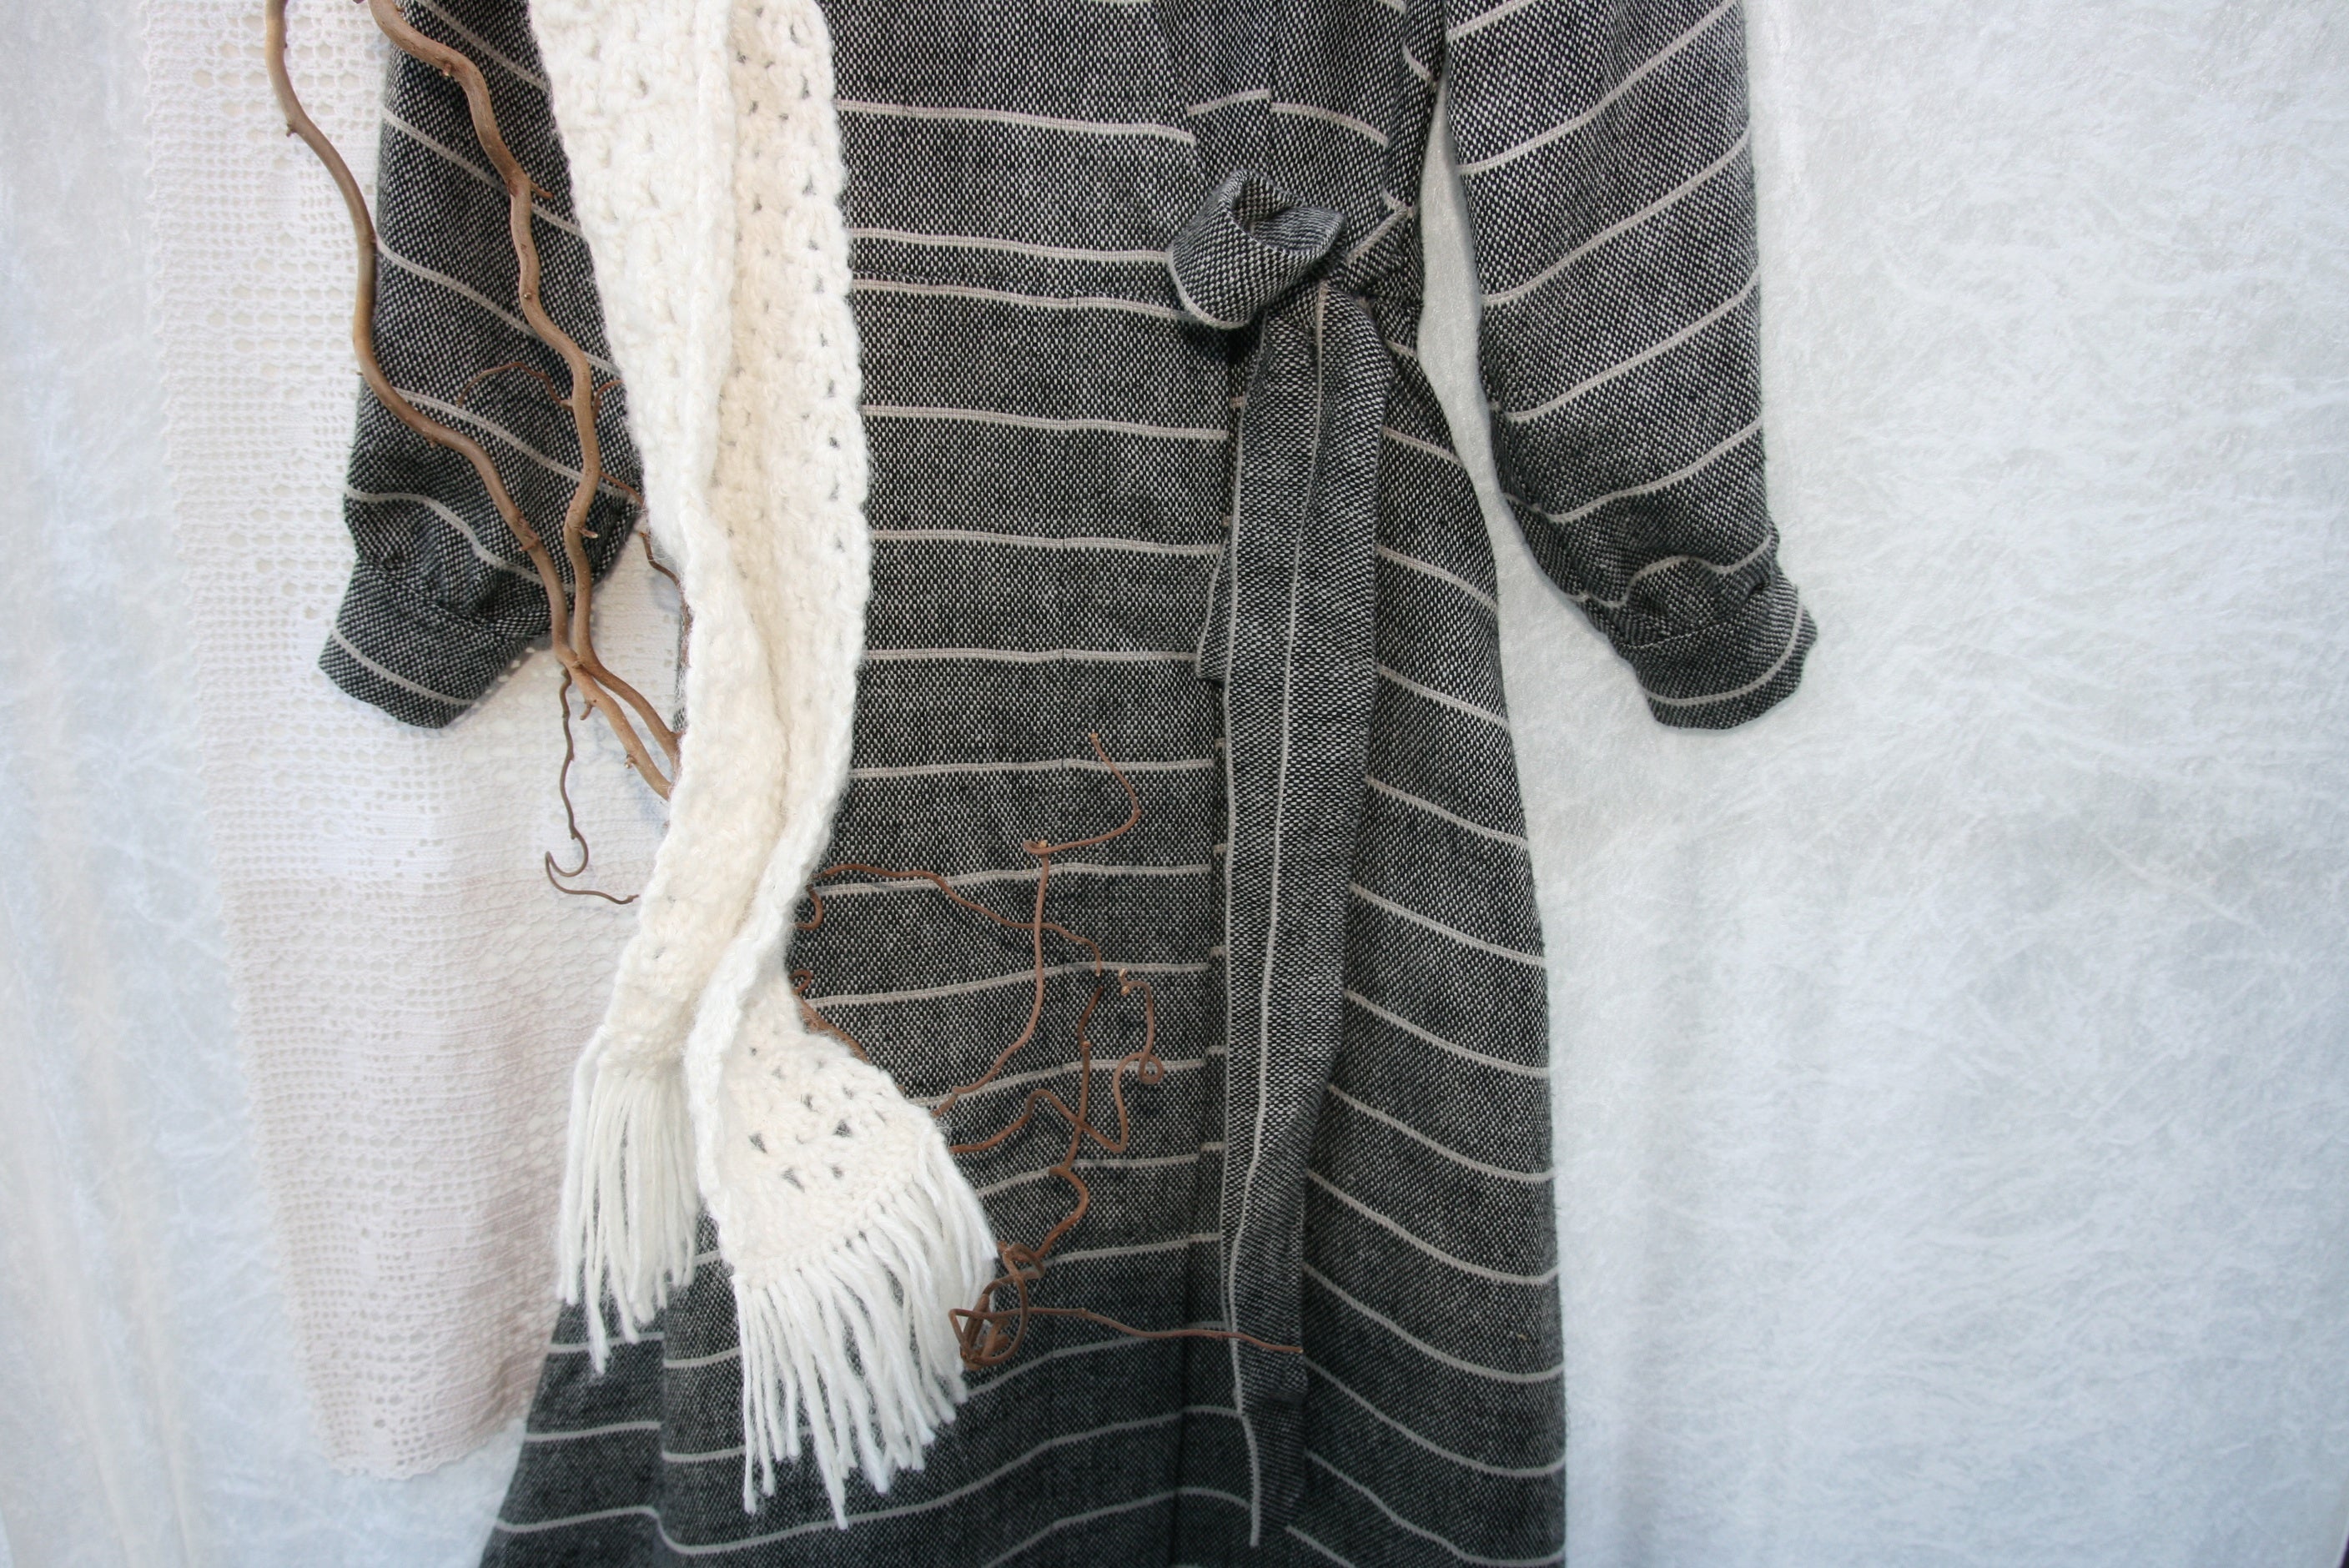 Long crocheted scarf